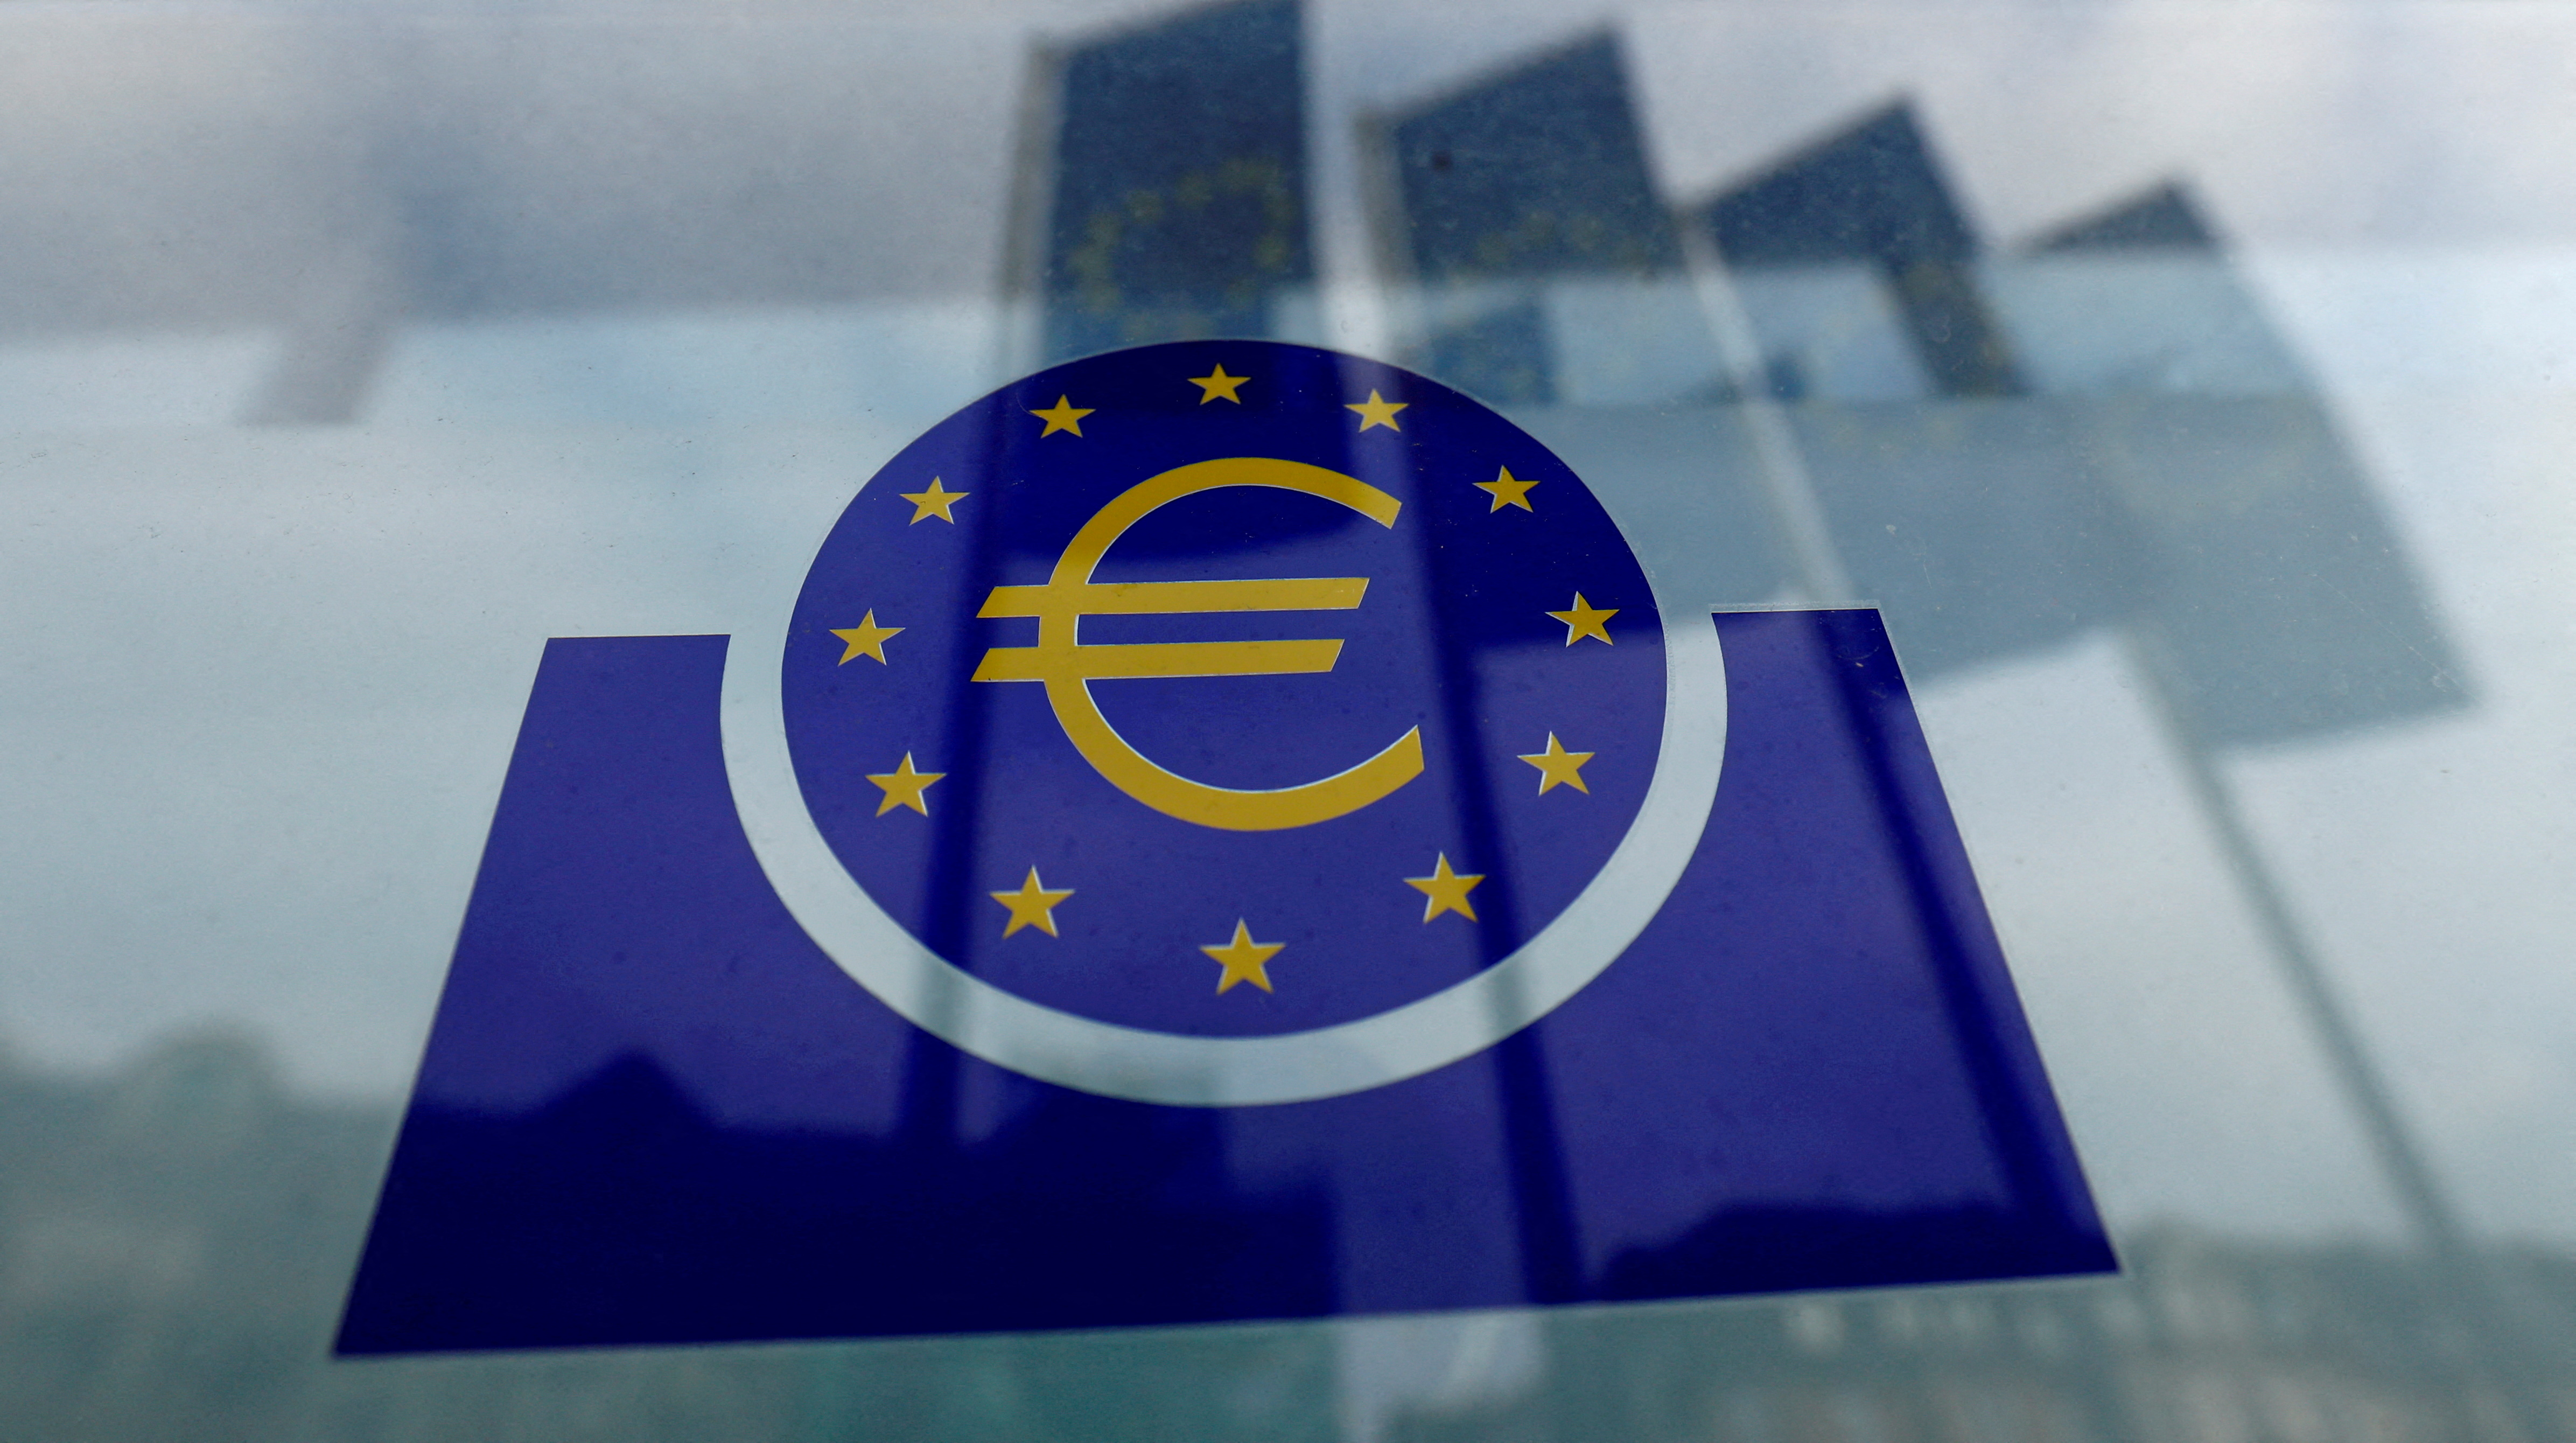 The European Central Bank (ECB) logo in Frankfurt